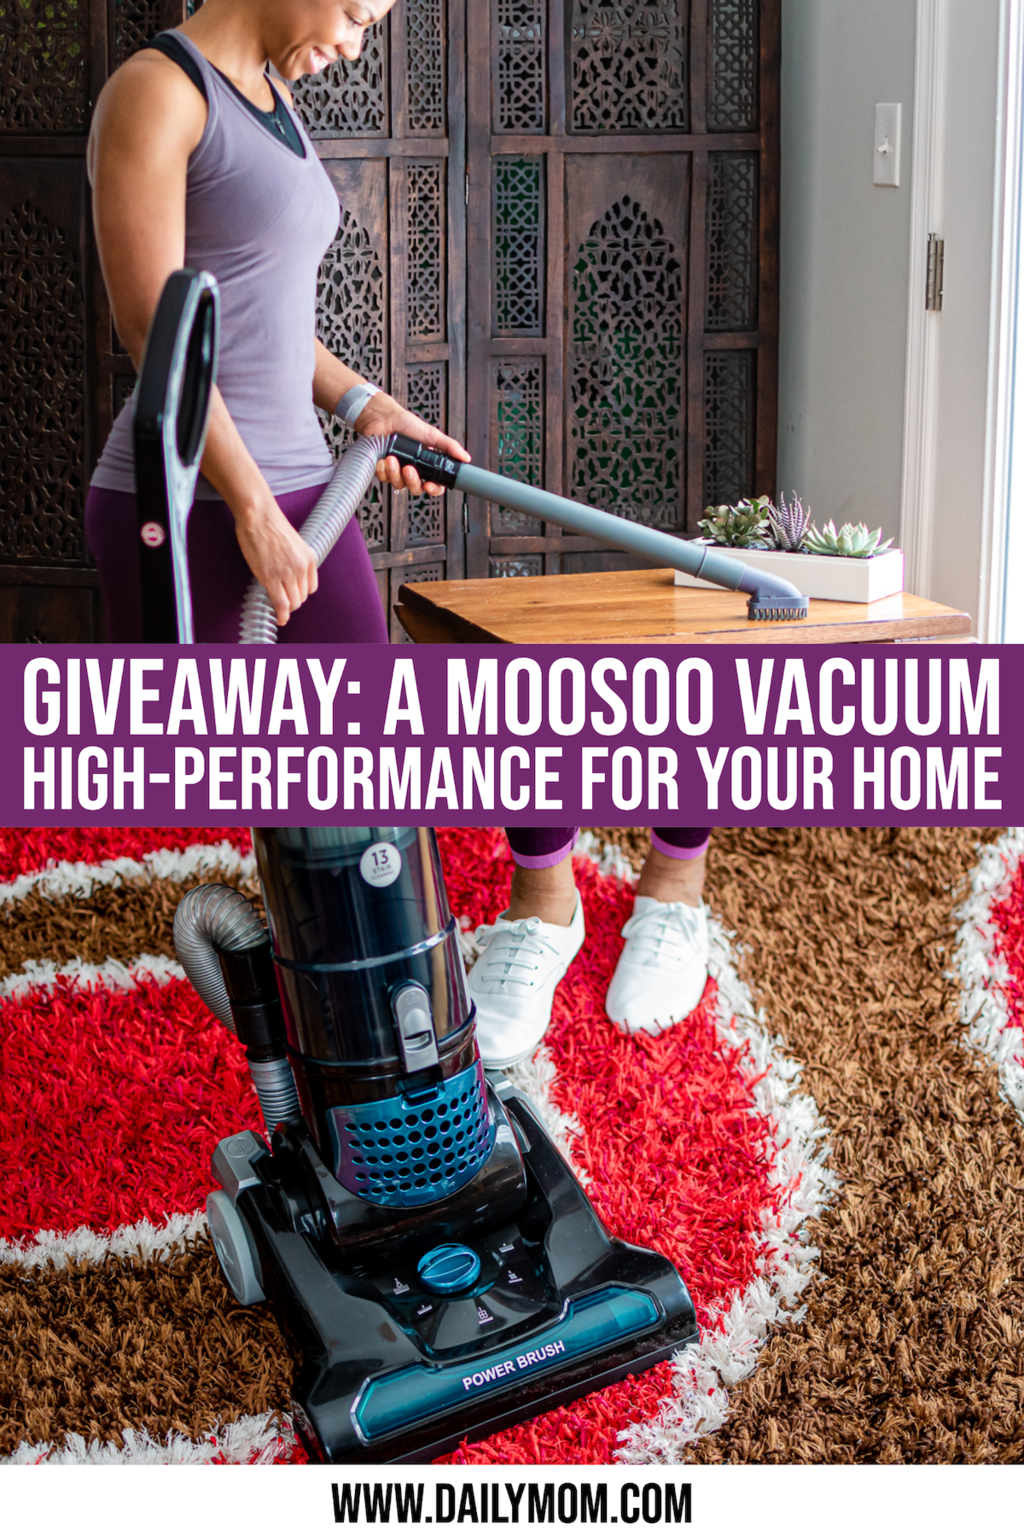 Giveaway: A High-Performance Moosoo Vacuum